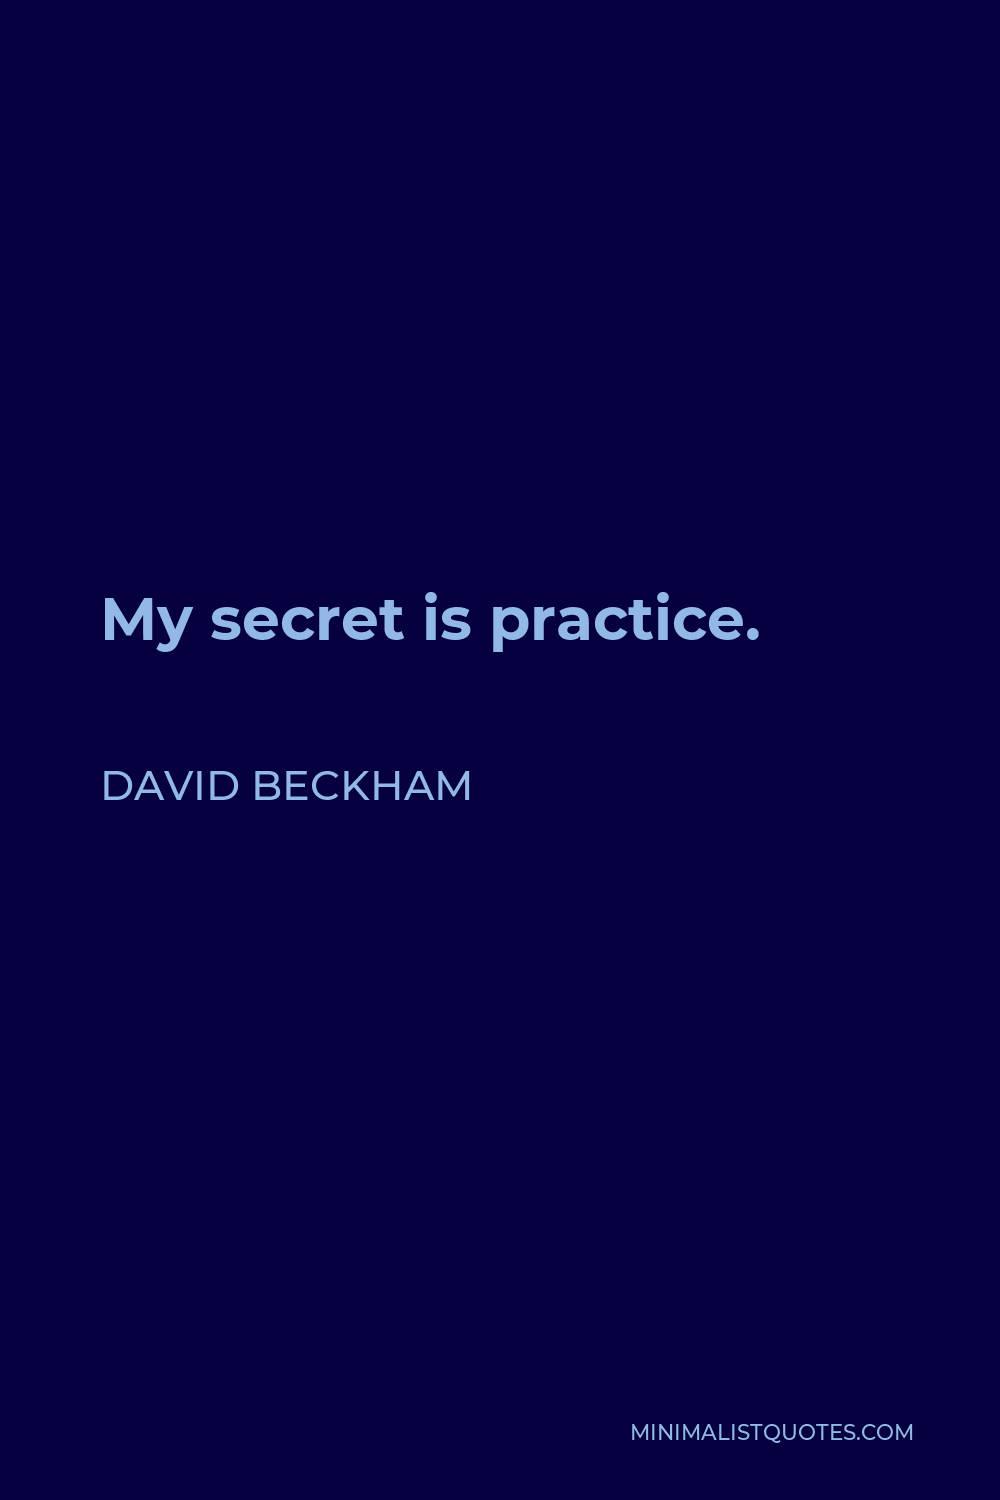 David Beckham Quote - My secret is practice.